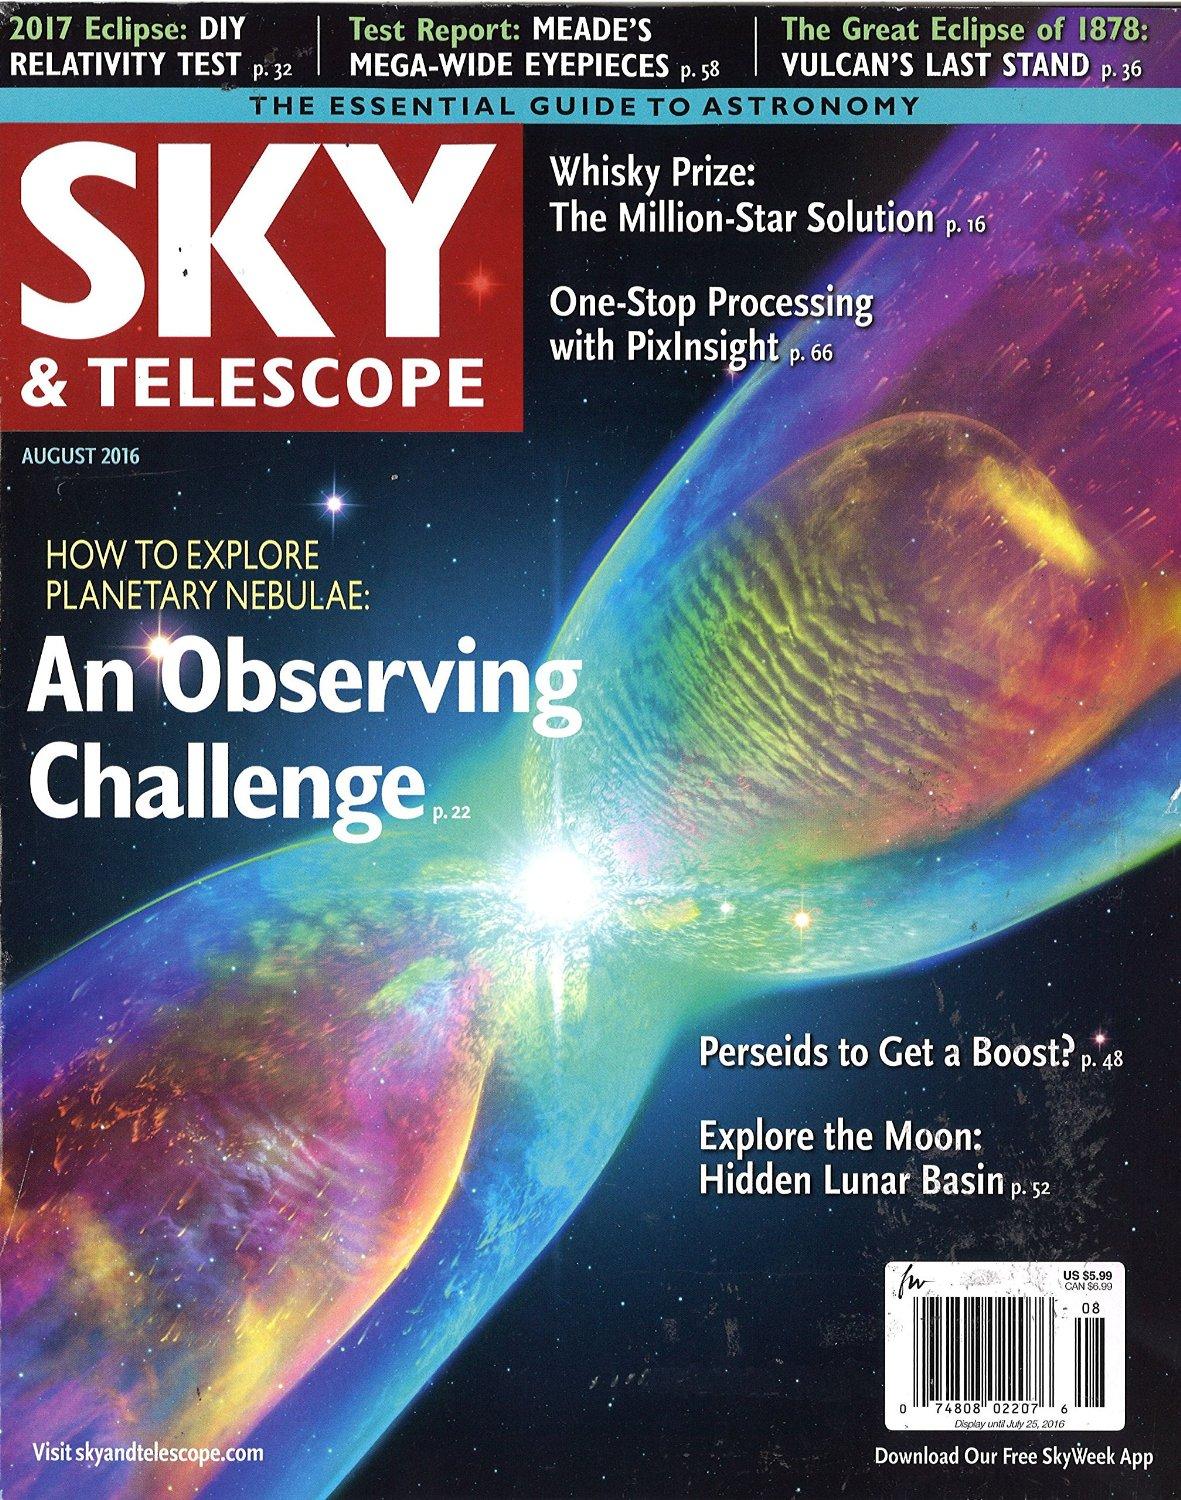 sky and telescope magazine november 2017